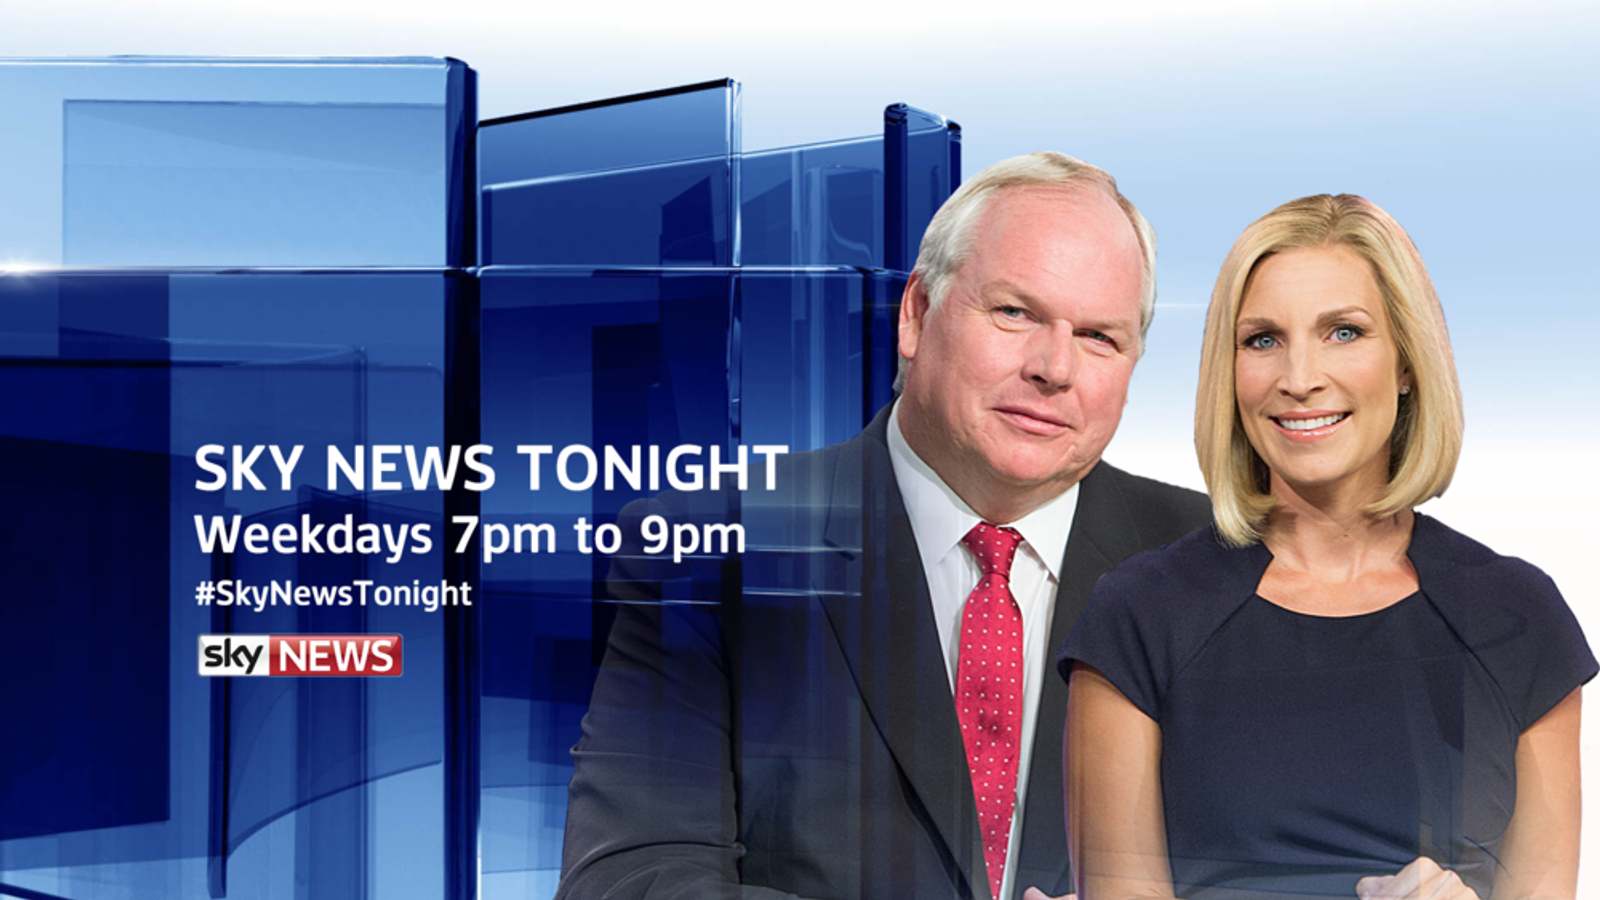 Sky News Tonight: Show Takes Fresh Approach | UK News ...